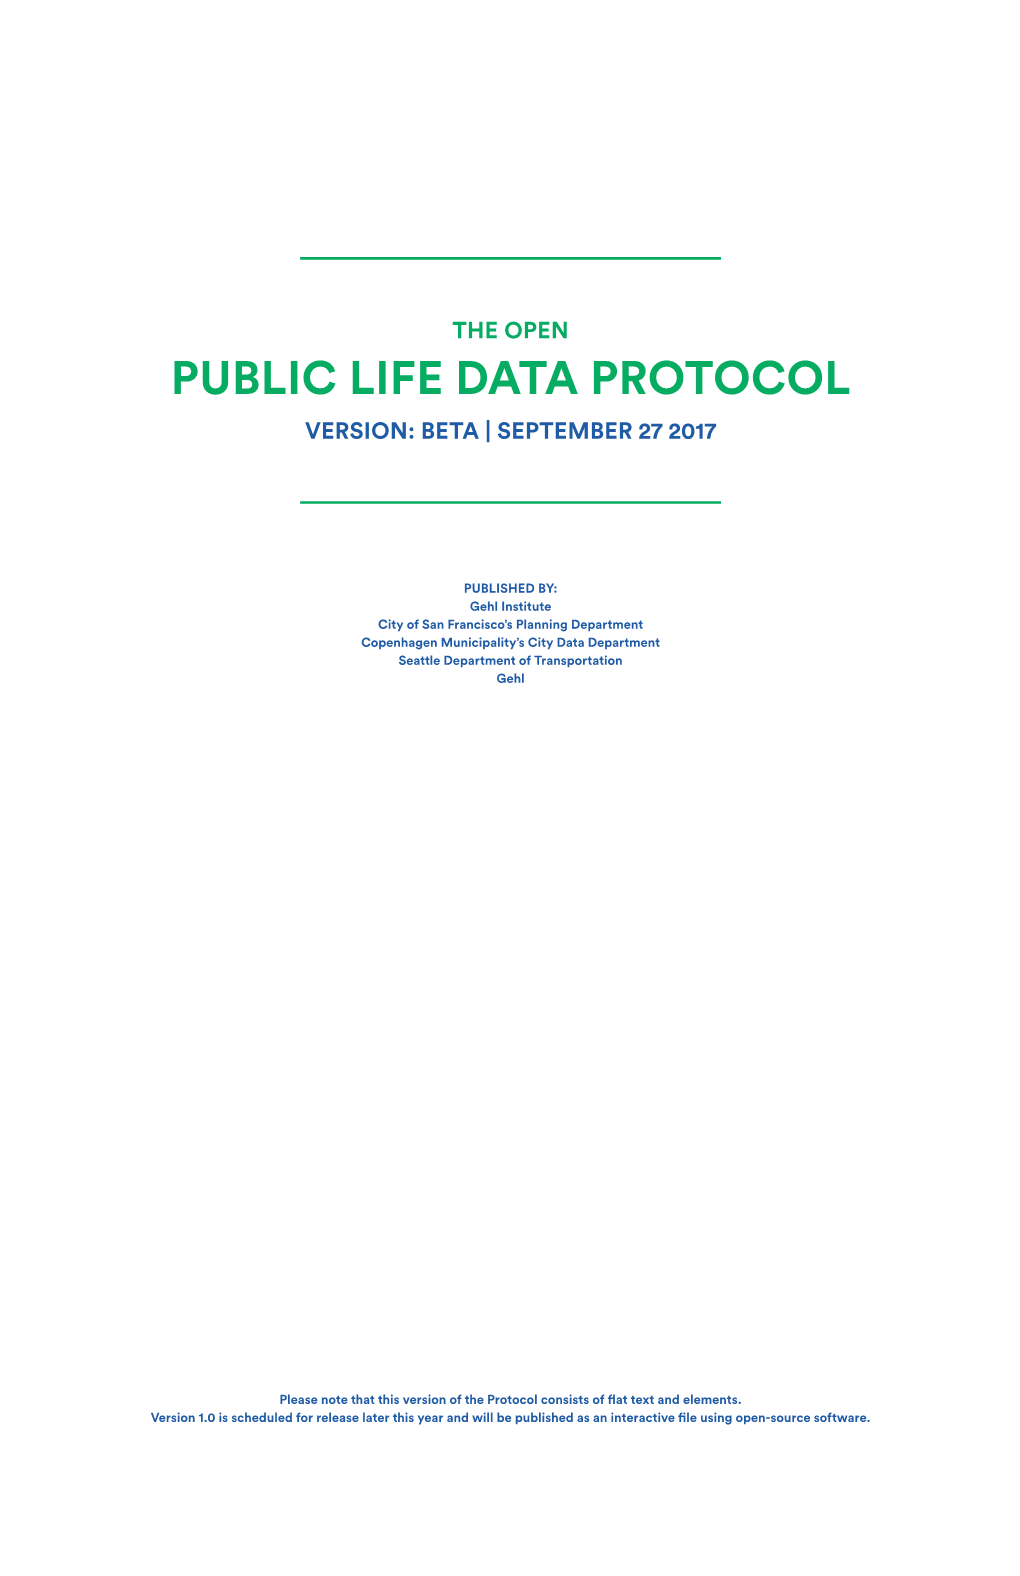 Public Life Data Protocol Version: Beta | September 27 2017